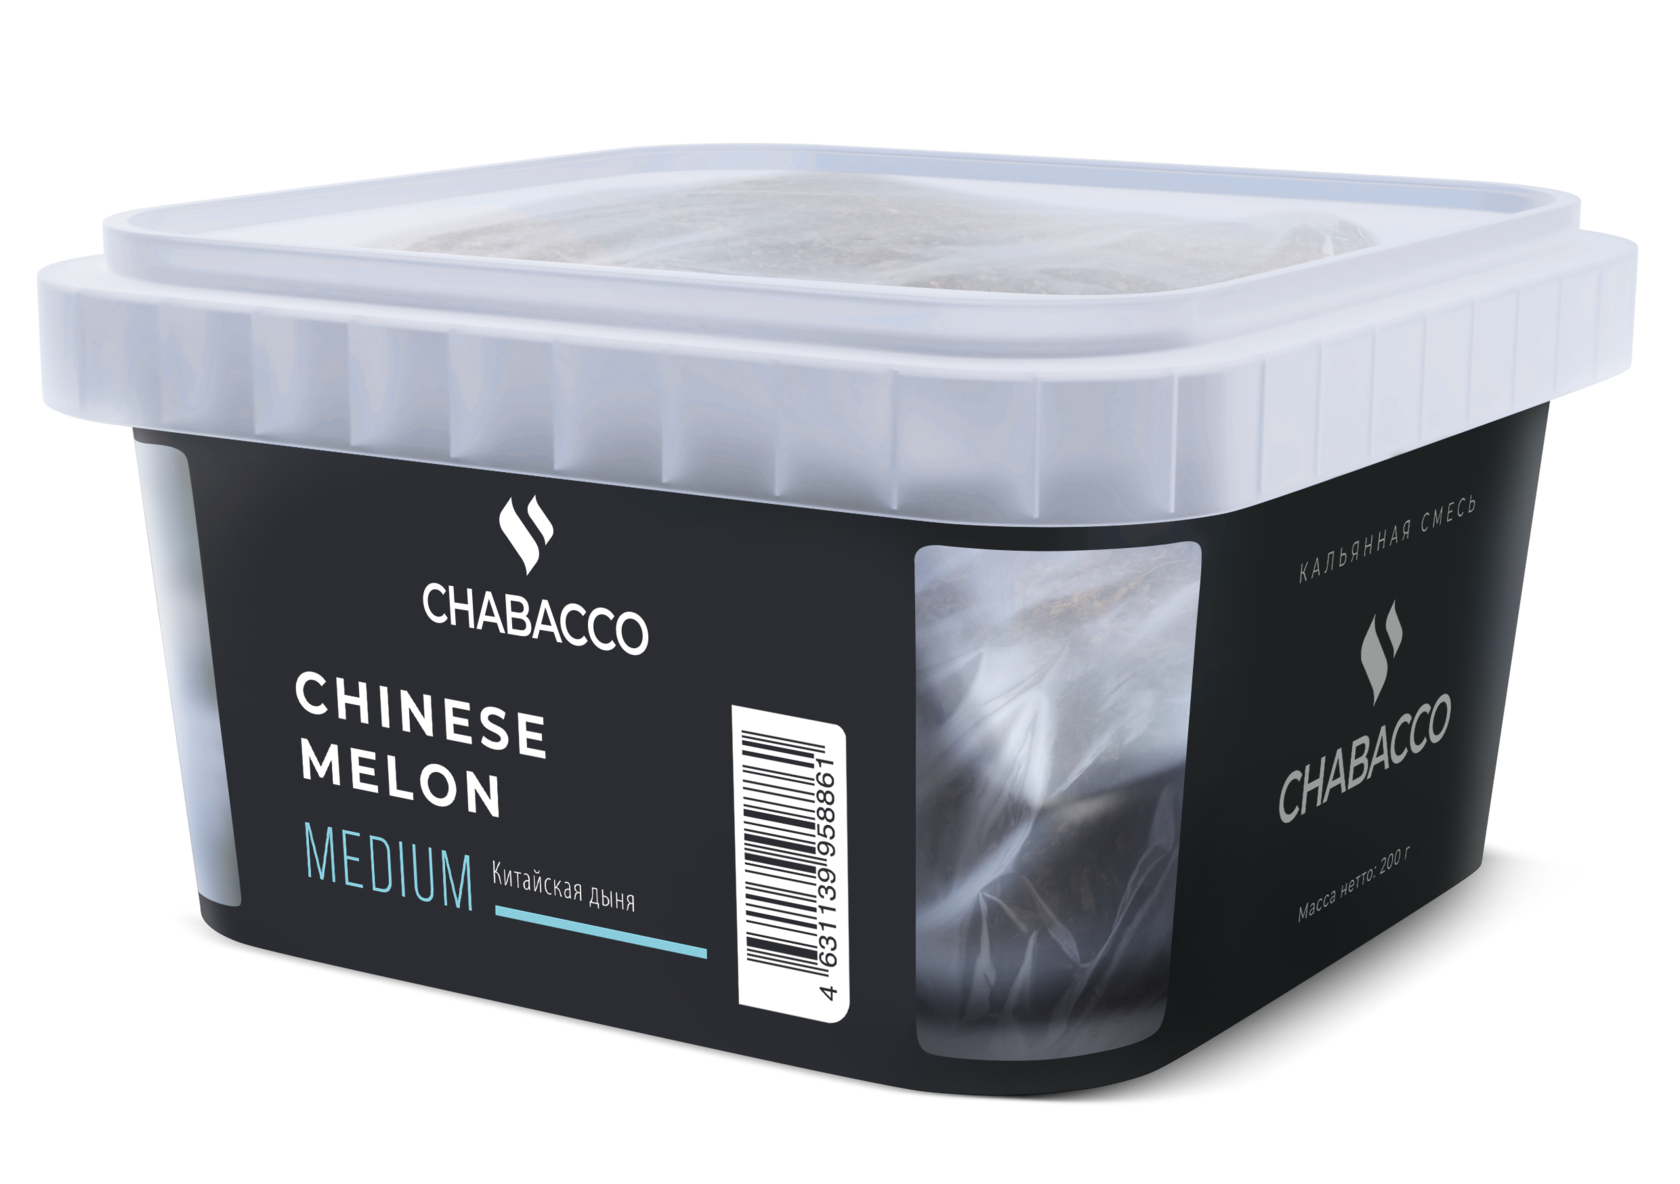 Chabacco - Medium - CHINESE MELON (с ароматом медовая дыня) - 200 г